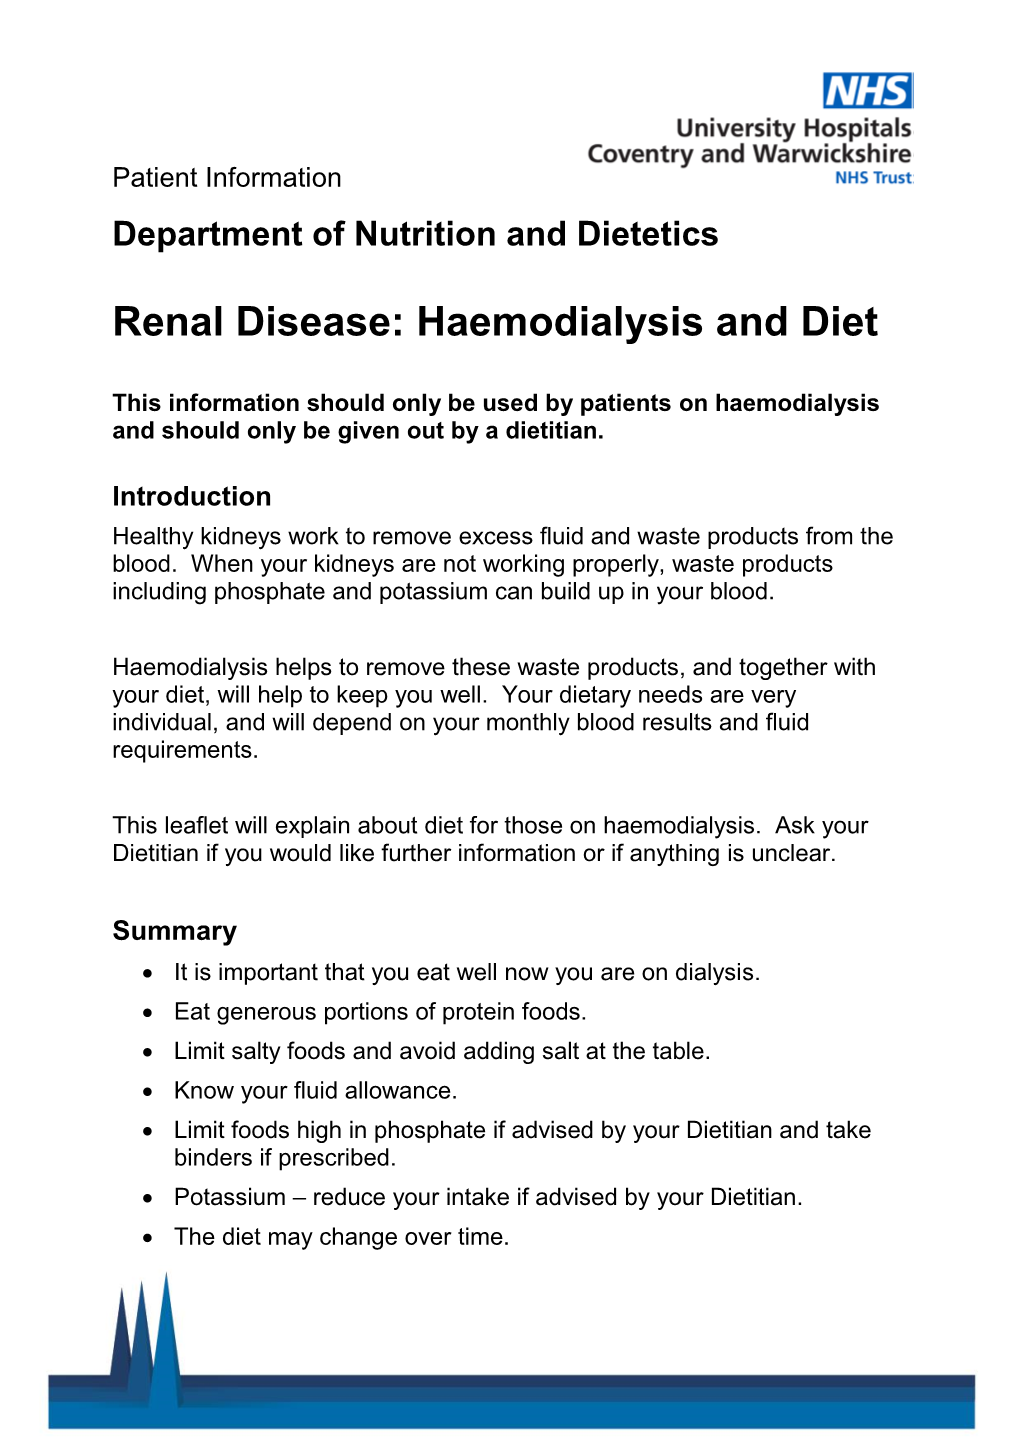 Renal Disease: Haemodialysis and Diet